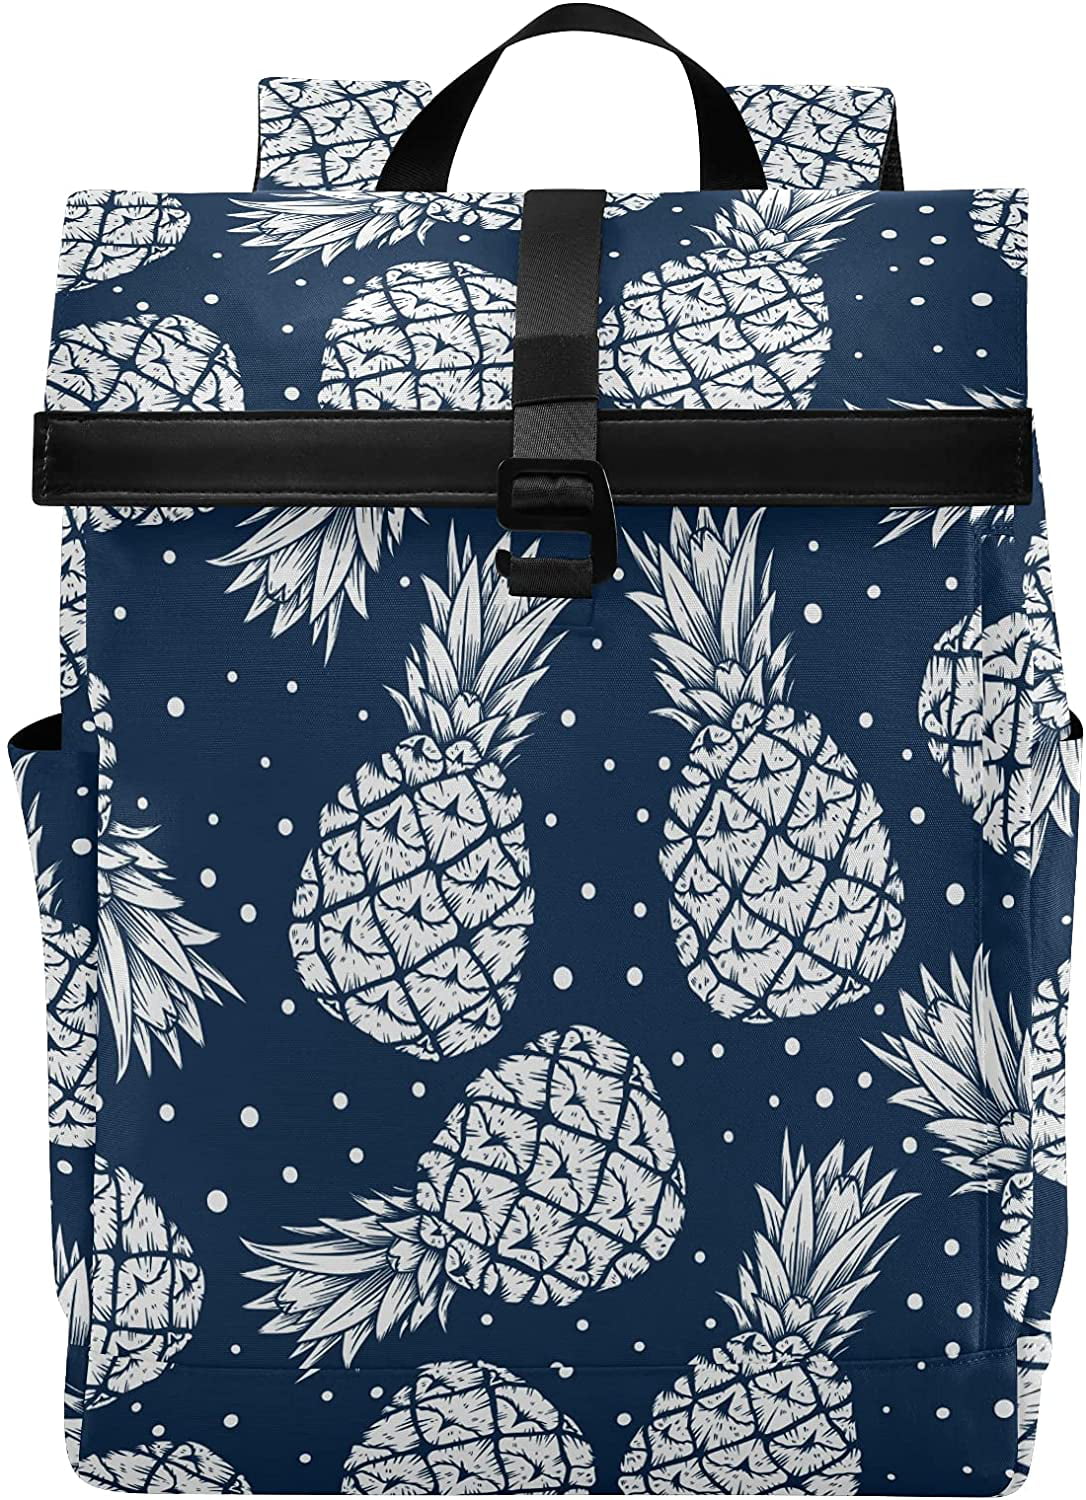 Pineapple Casual Backpack Waterproof Laptop Backpack for Men Women Daypack